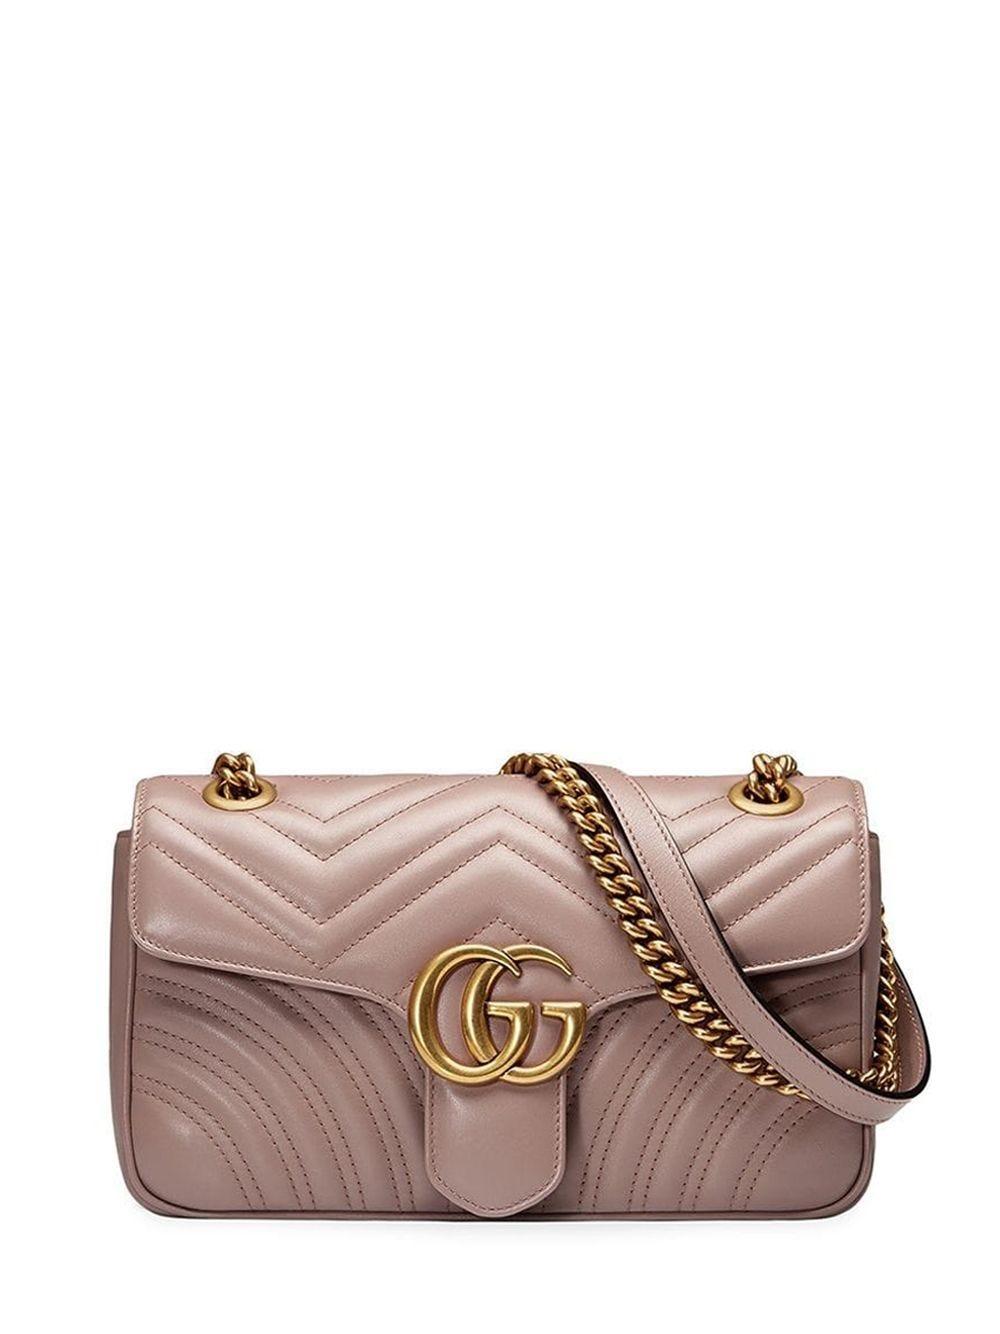 Gucci GG Marmont Matelassé Shoulder Bag in Pink